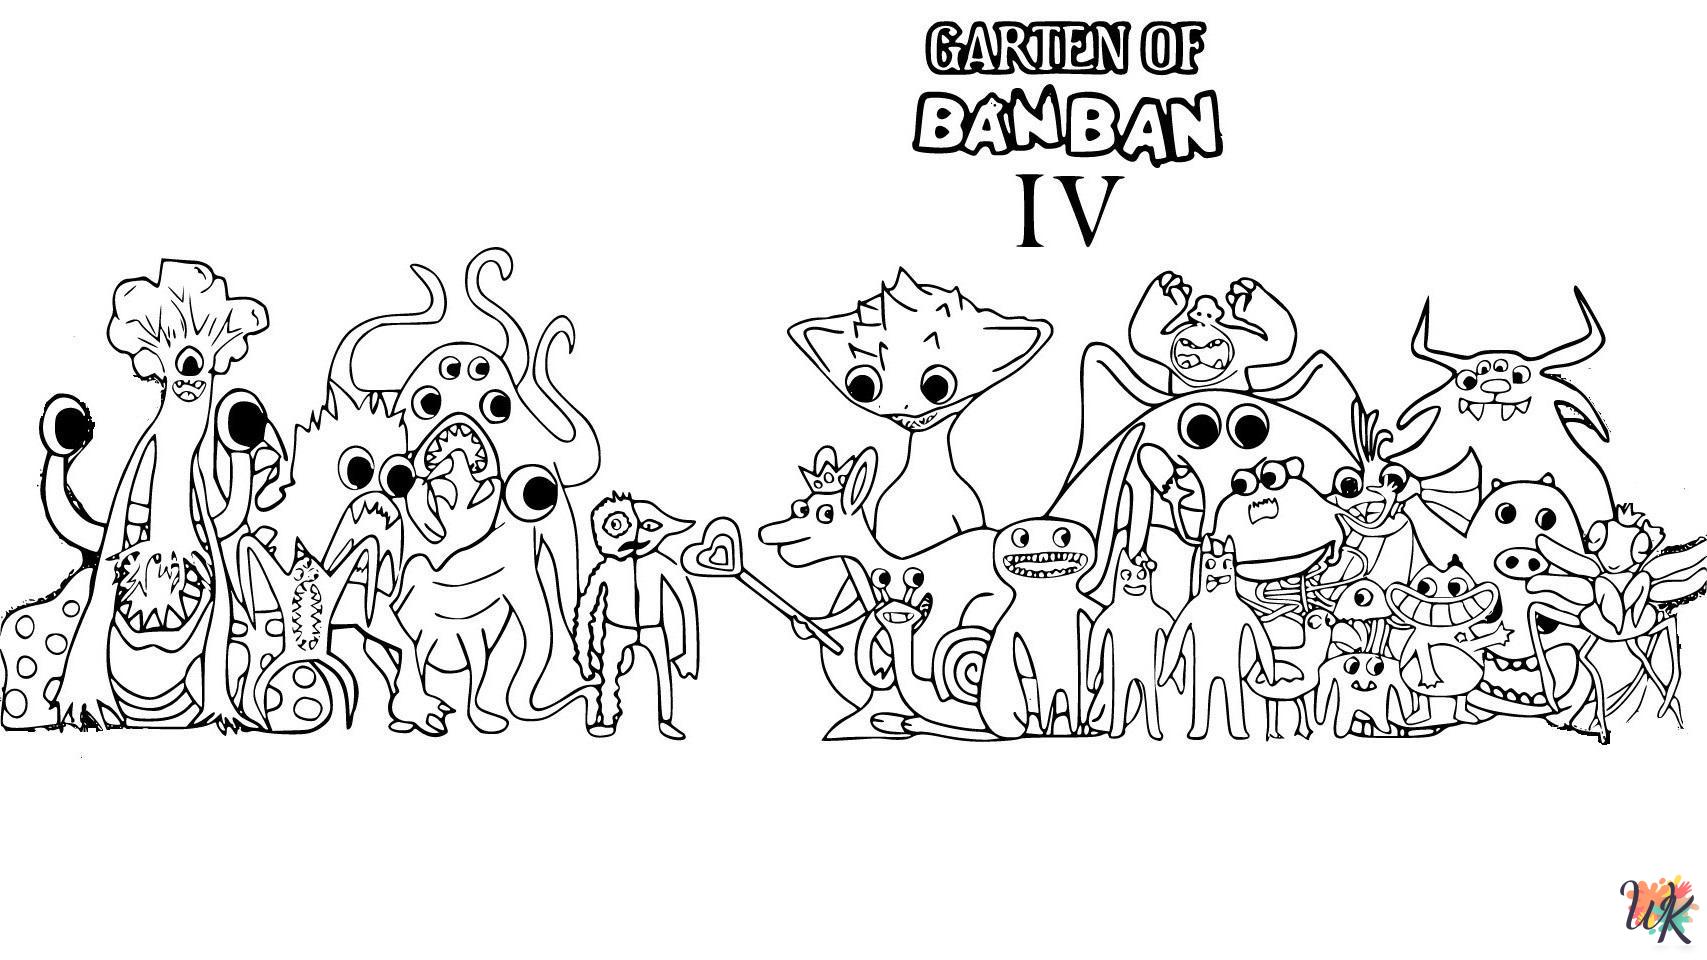 Garten Of Banban 4 coloring pages